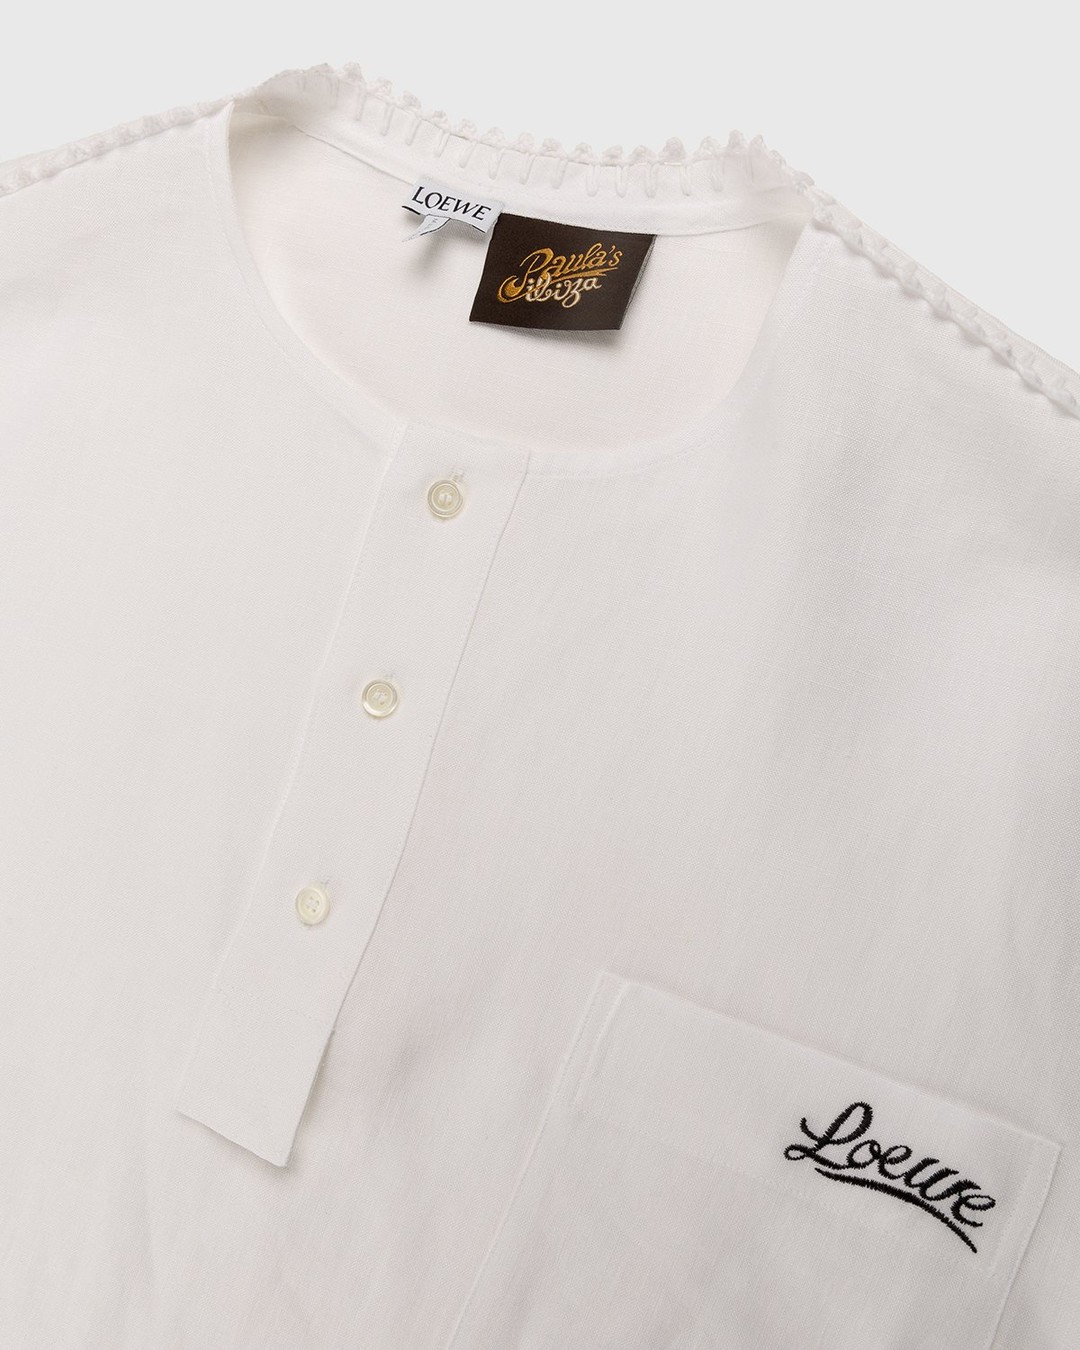 Loewe – Paula's Ibiza Buttoned Pullover Shirt White - Longsleeves - White - Image 4